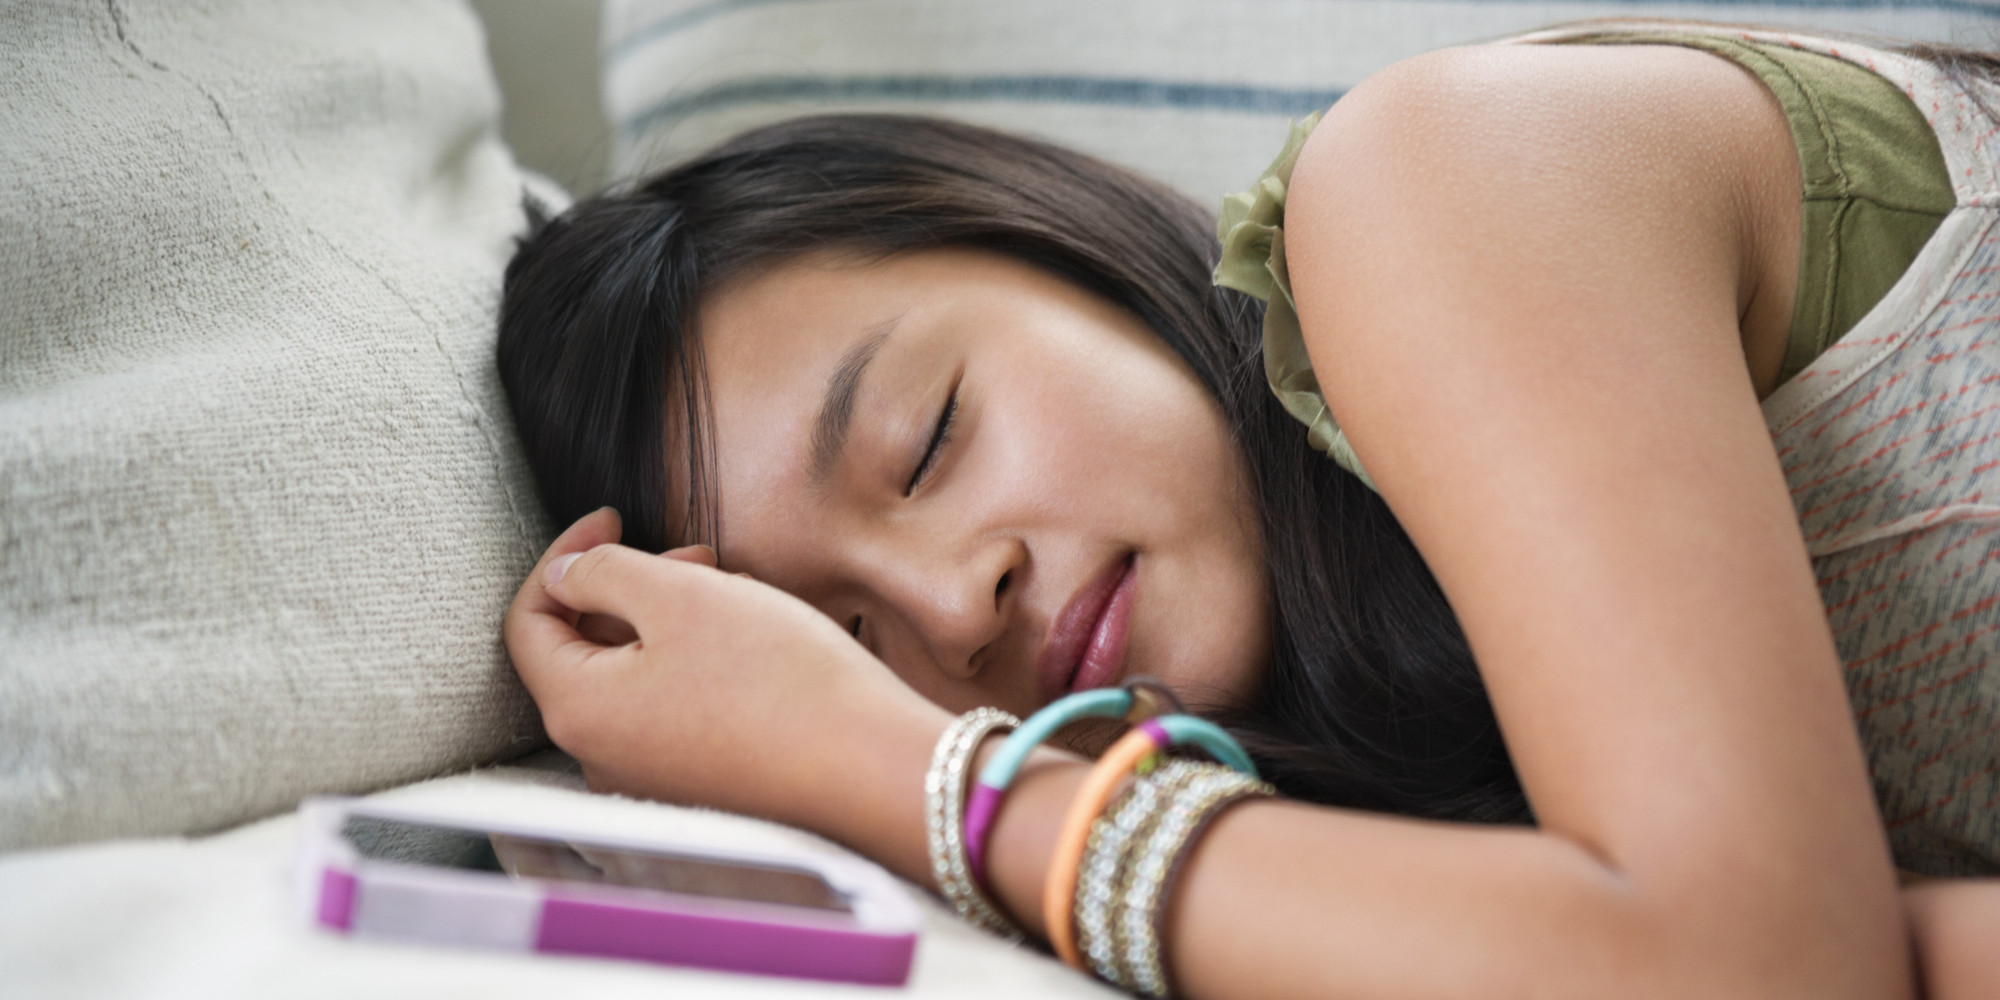 S Sleep Studies For Teen 14